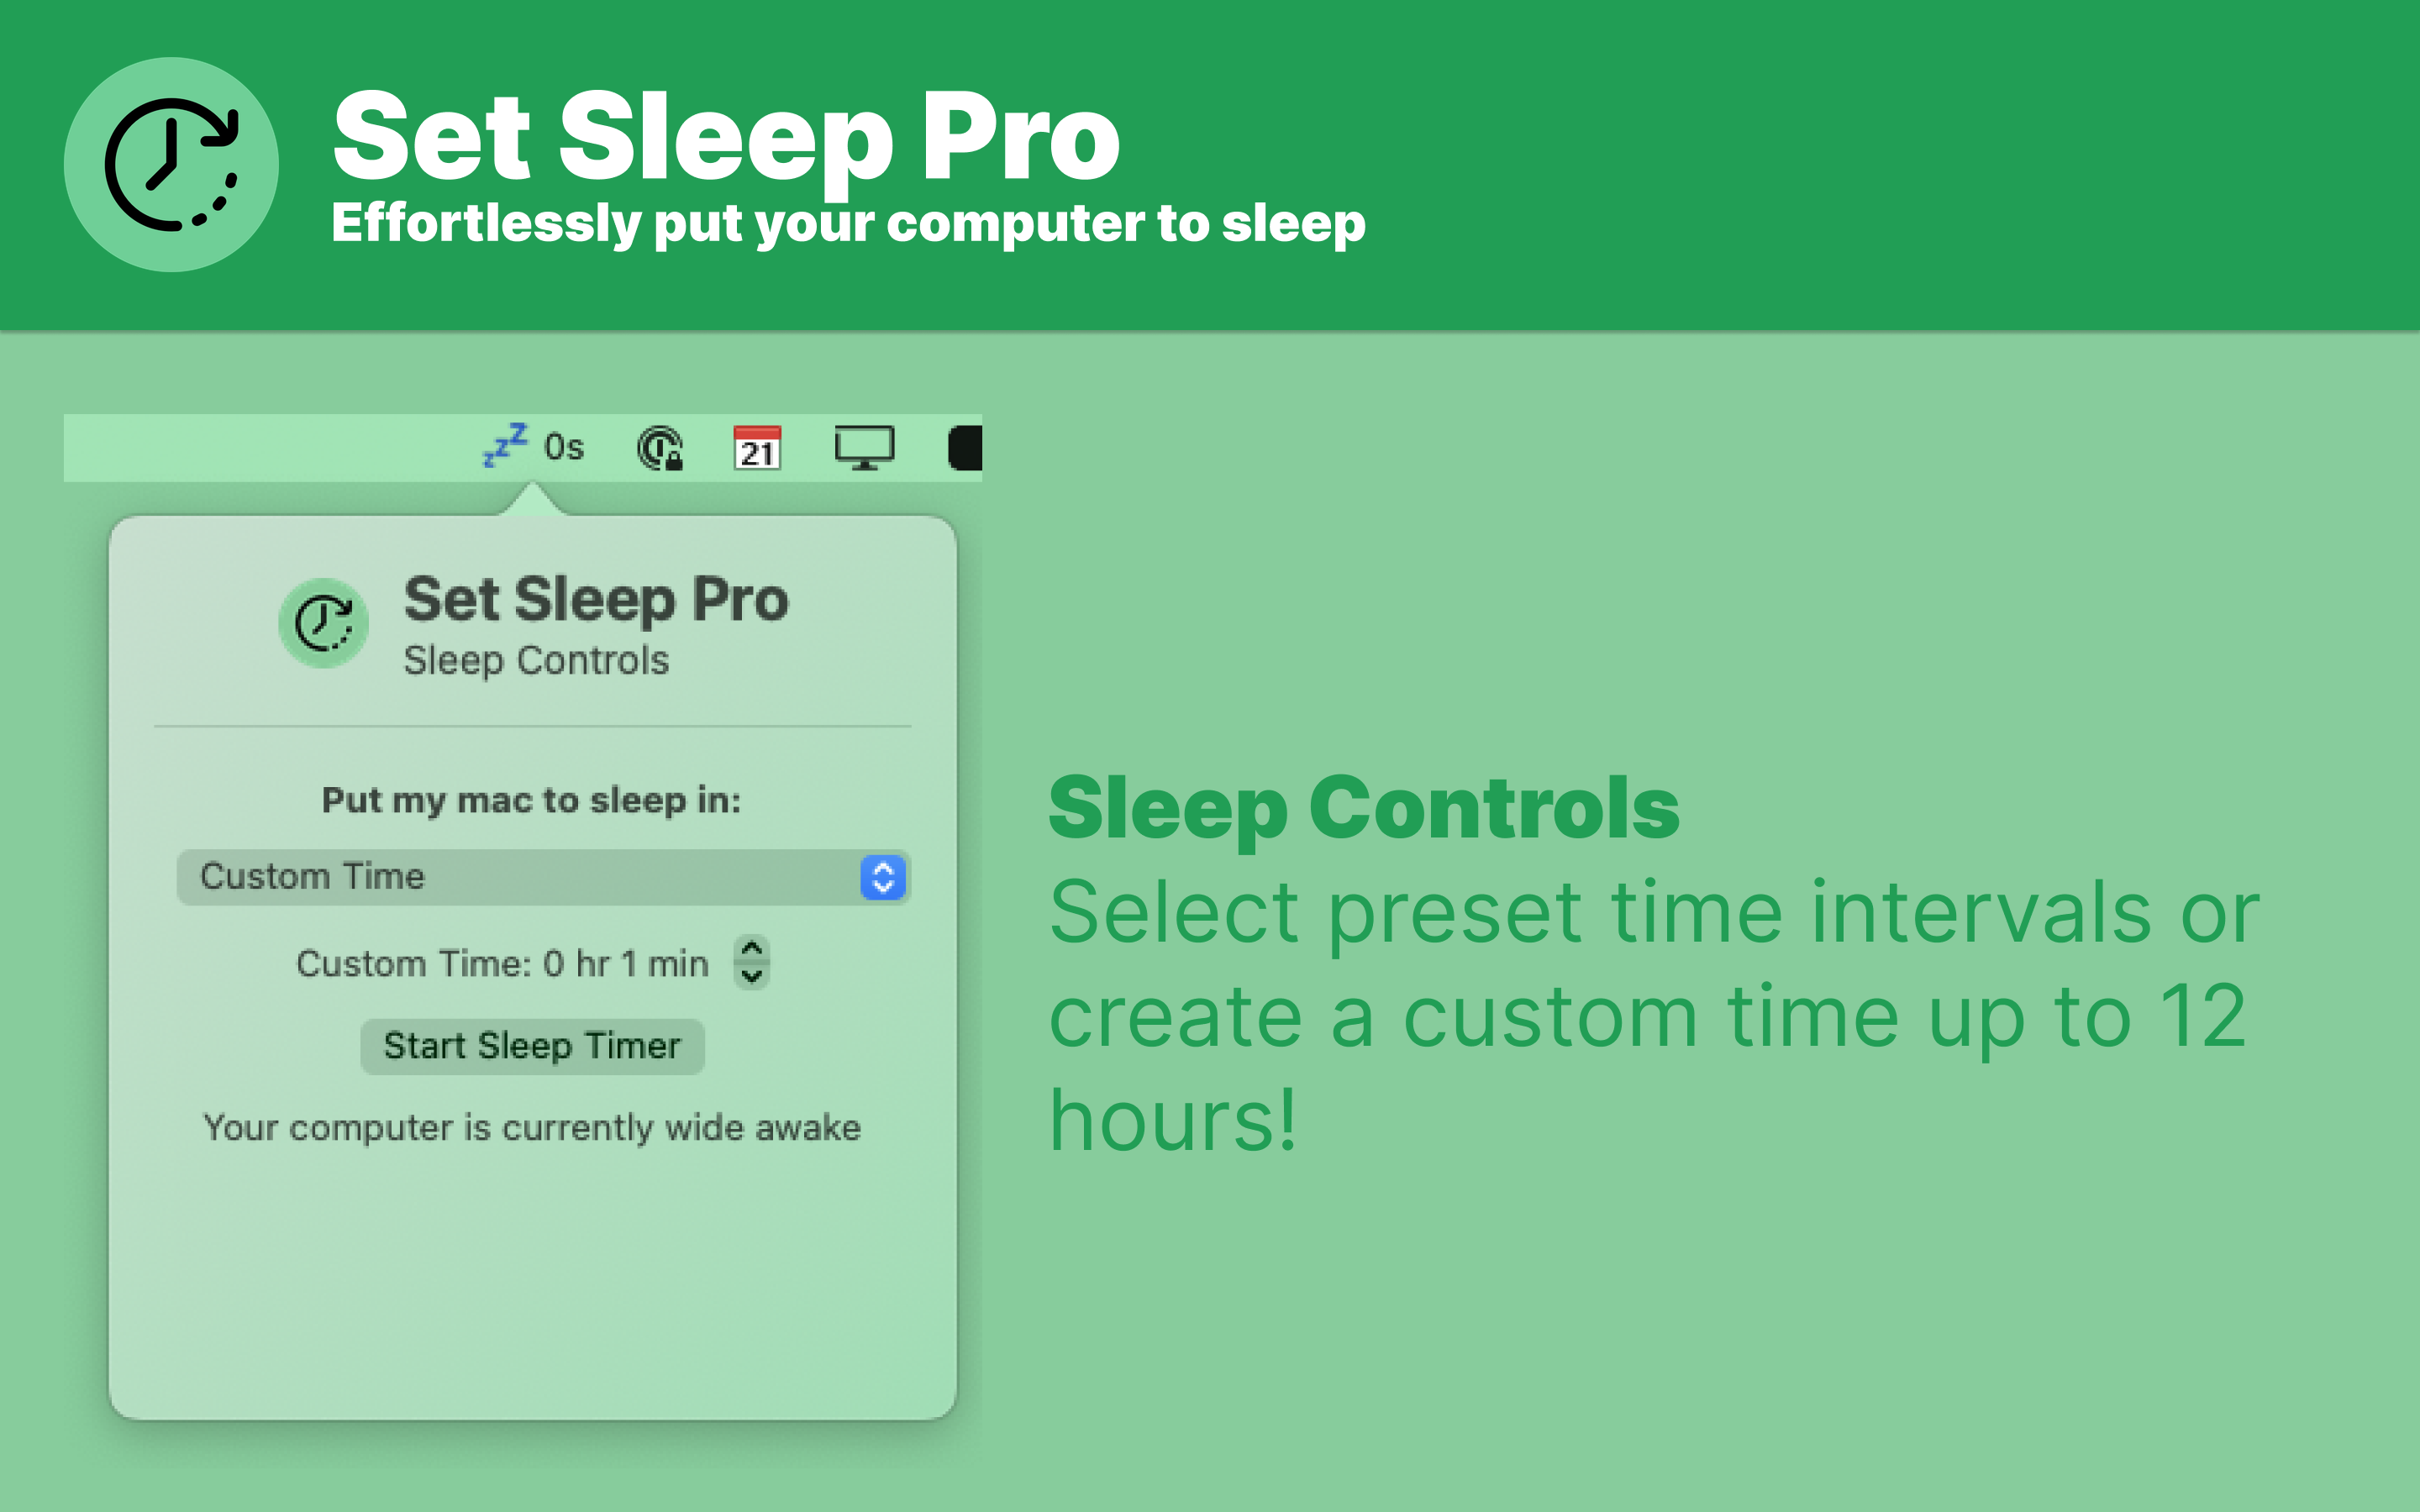 Set Sleep Pro for macOS by Eric David Smith